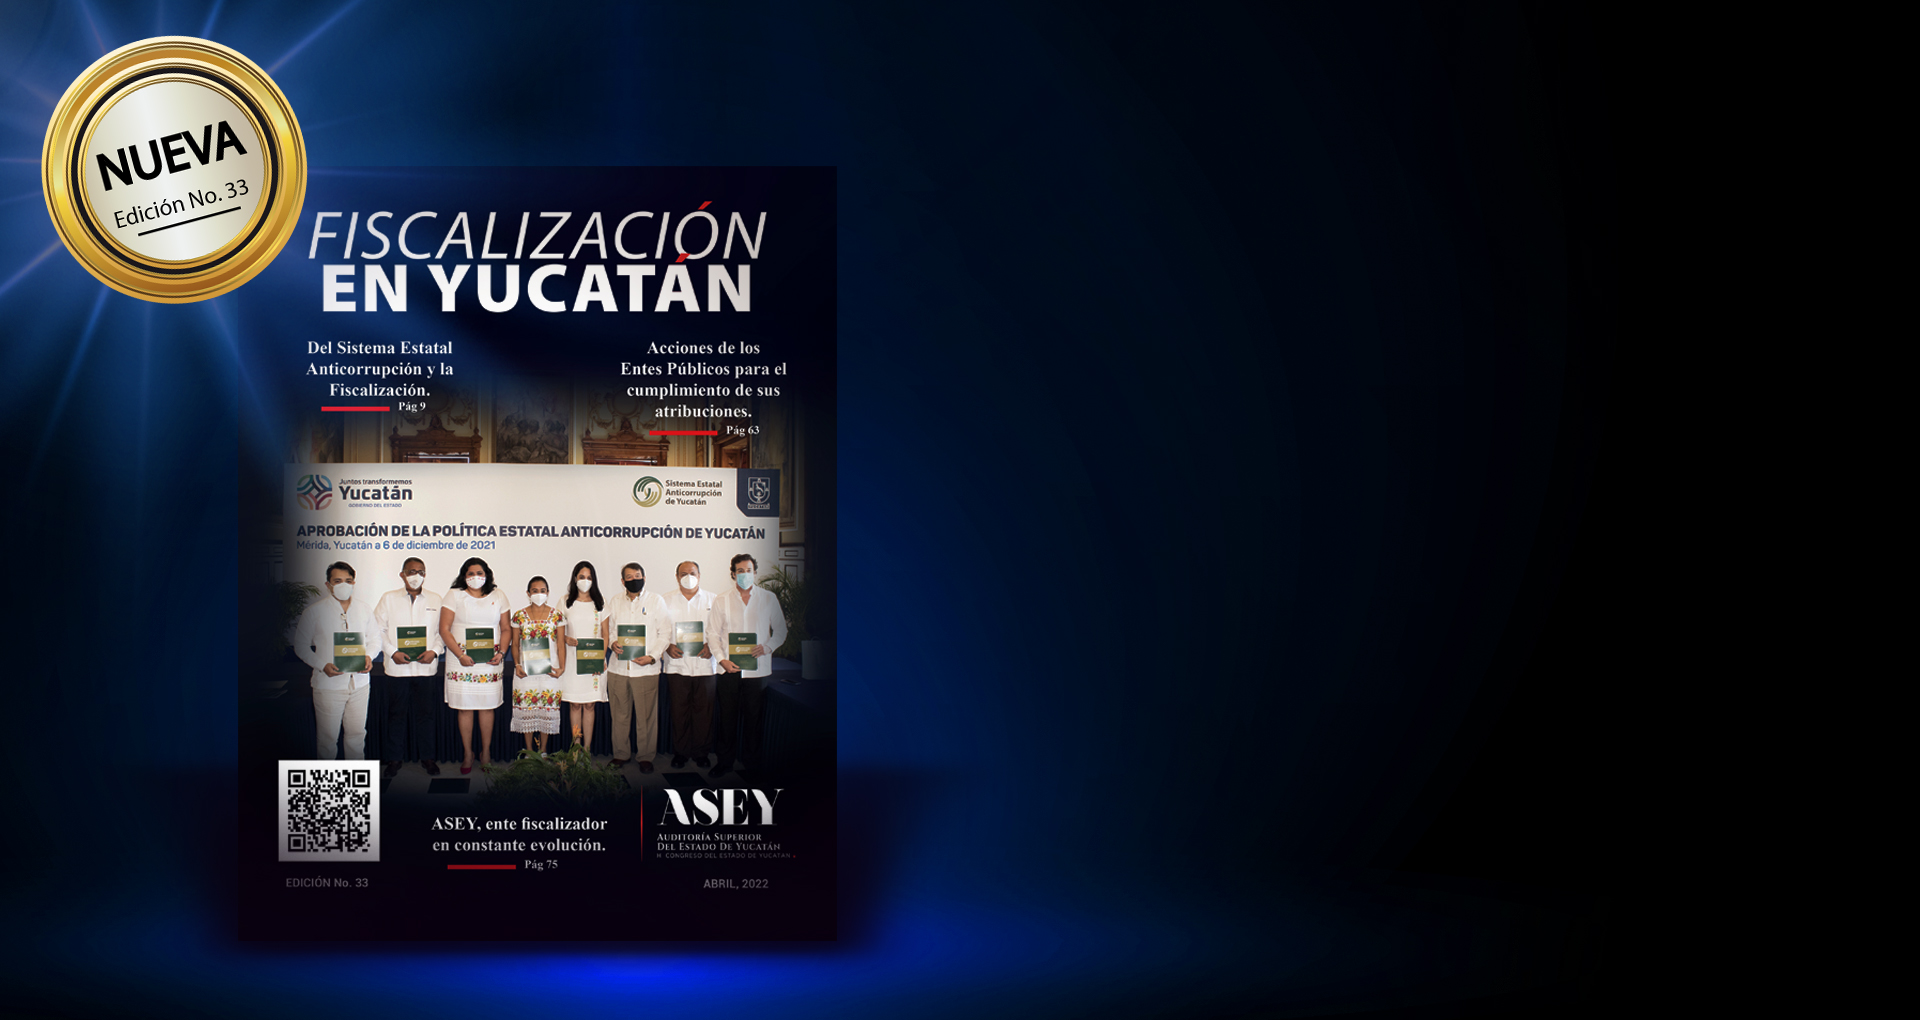 Fiscalización en Yucatán Edición No.33